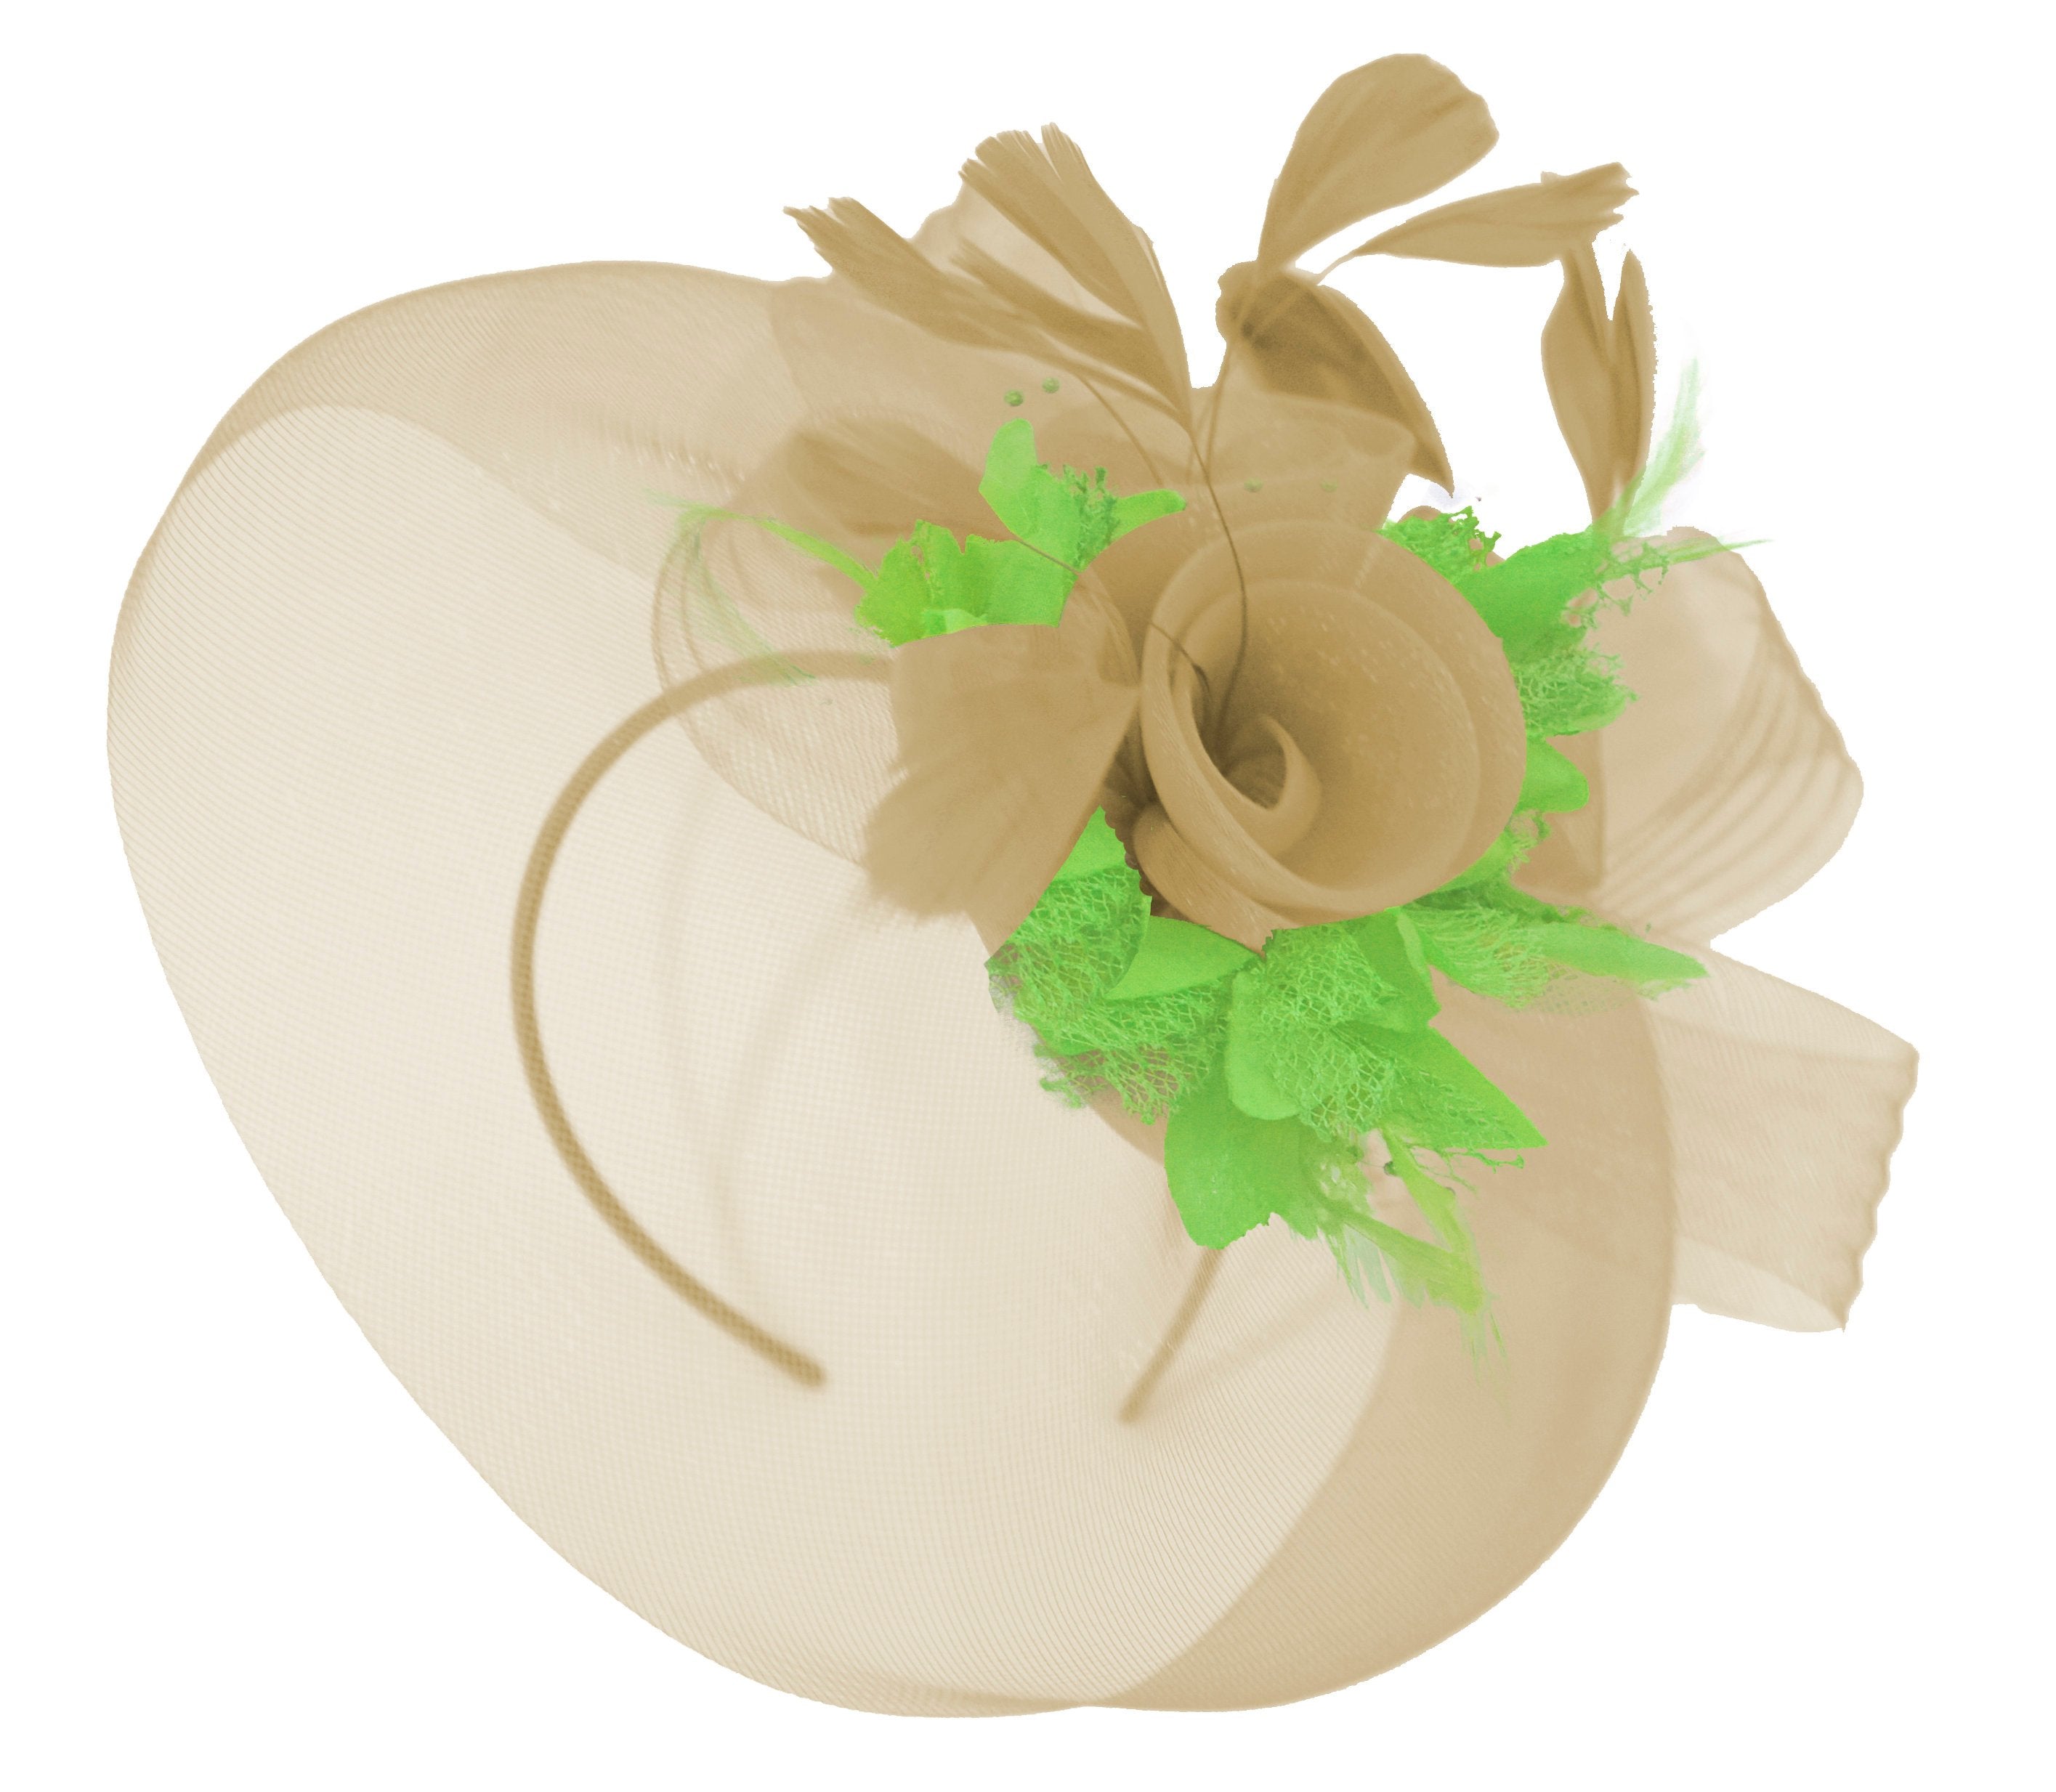 Caprilite Beige Camel and Lime Green Fascinator Hat Veil Net Hair Clip Ascot Derby Races Wedding Headband Feather Flower